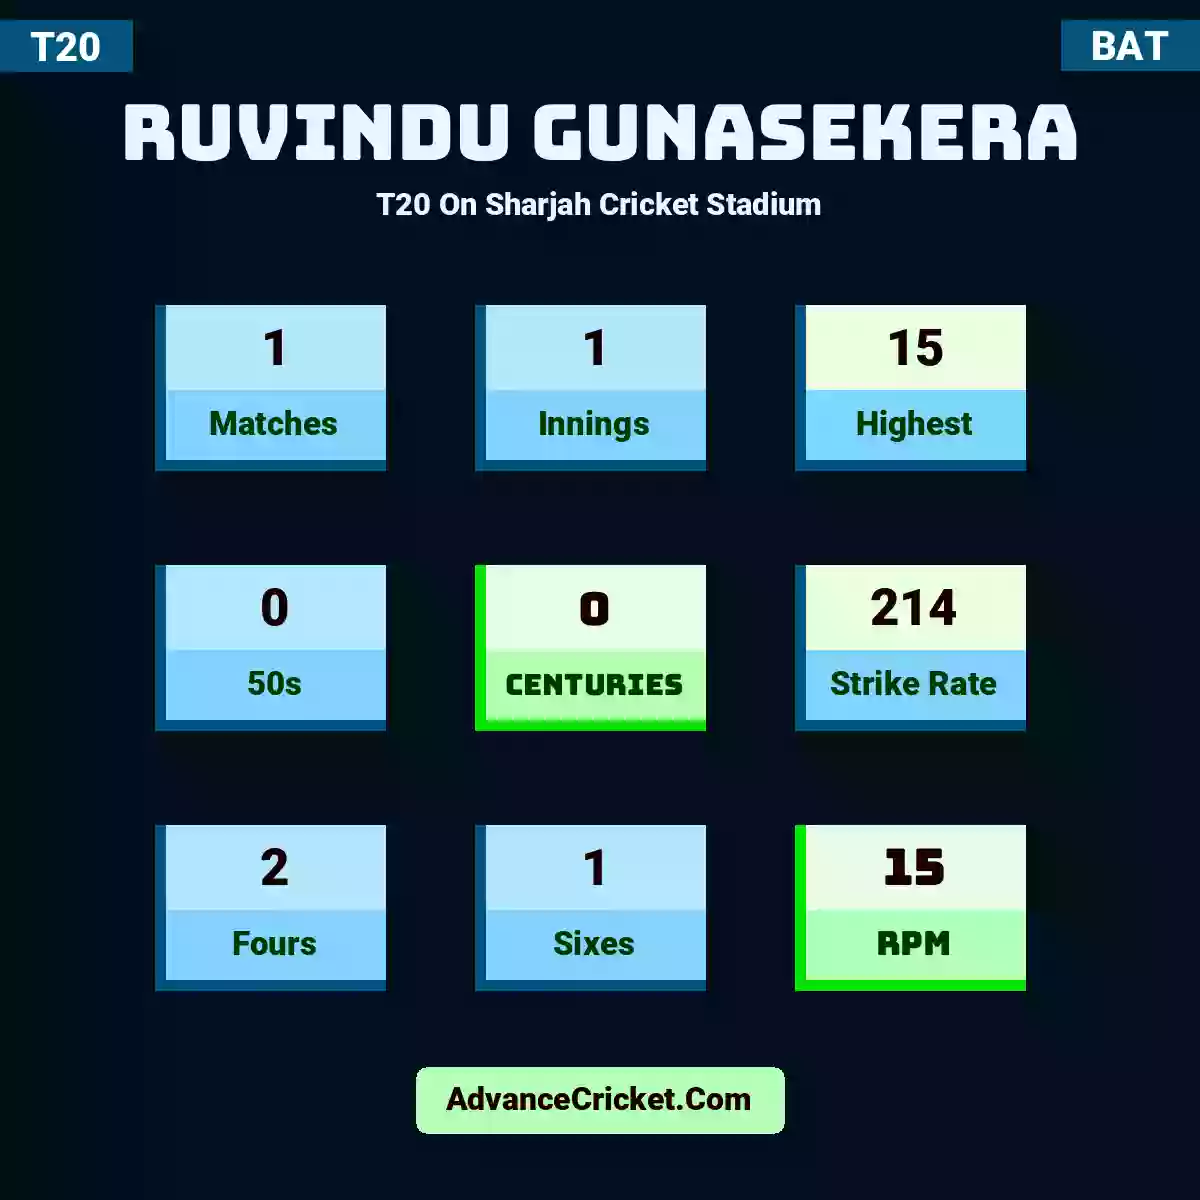 Ruvindu Gunasekera T20  On Sharjah Cricket Stadium, Ruvindu Gunasekera played 1 matches, scored 15 runs as highest, 0 half-centuries, and 0 centuries, with a strike rate of 214. R.Gunasekera hit 2 fours and 1 sixes, with an RPM of 15.